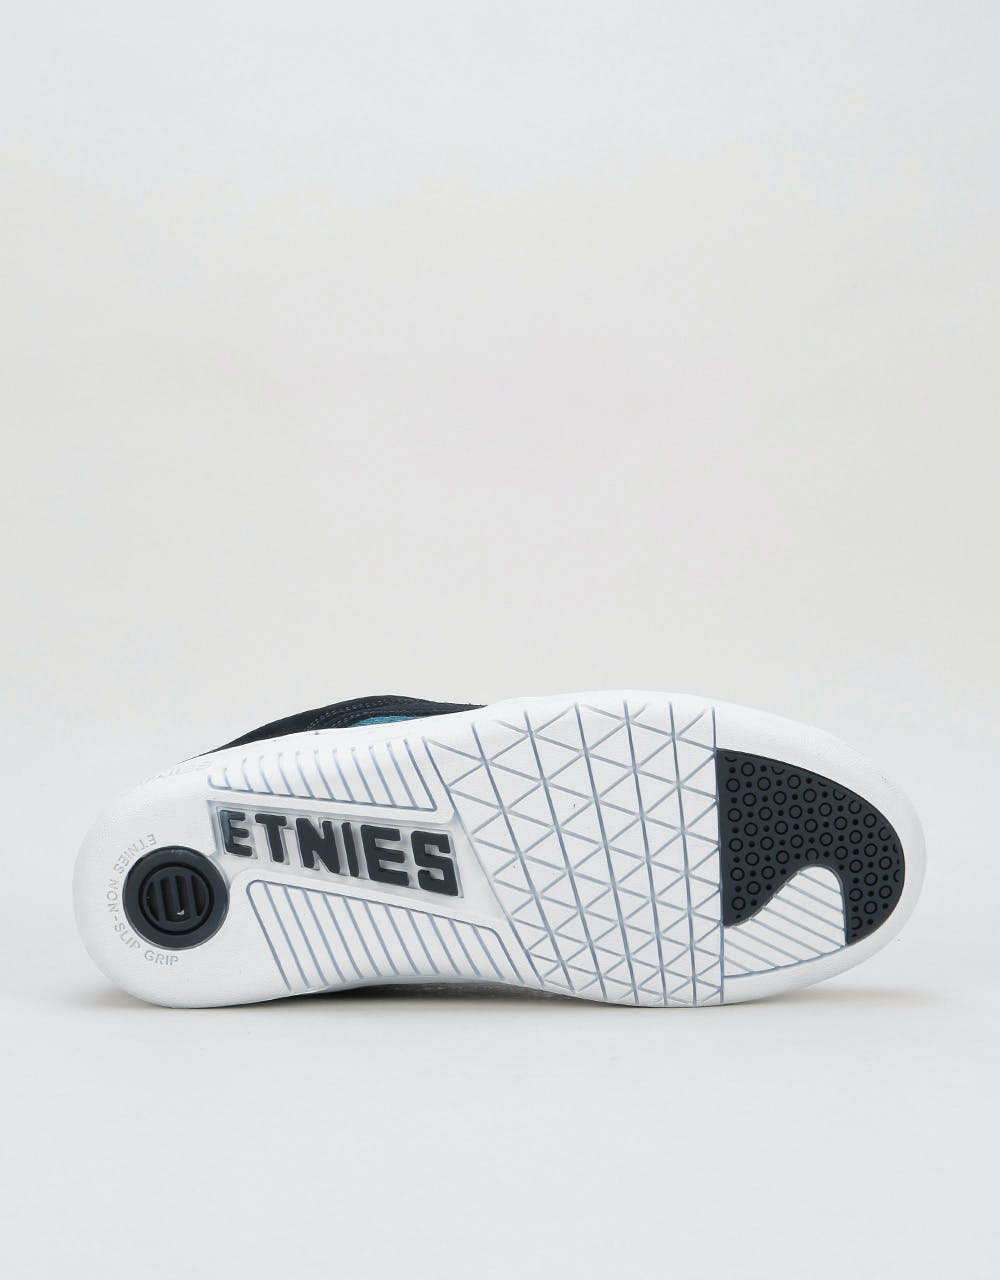 Etnies Senix Lo Skate Shoes - Navy/Gold/White